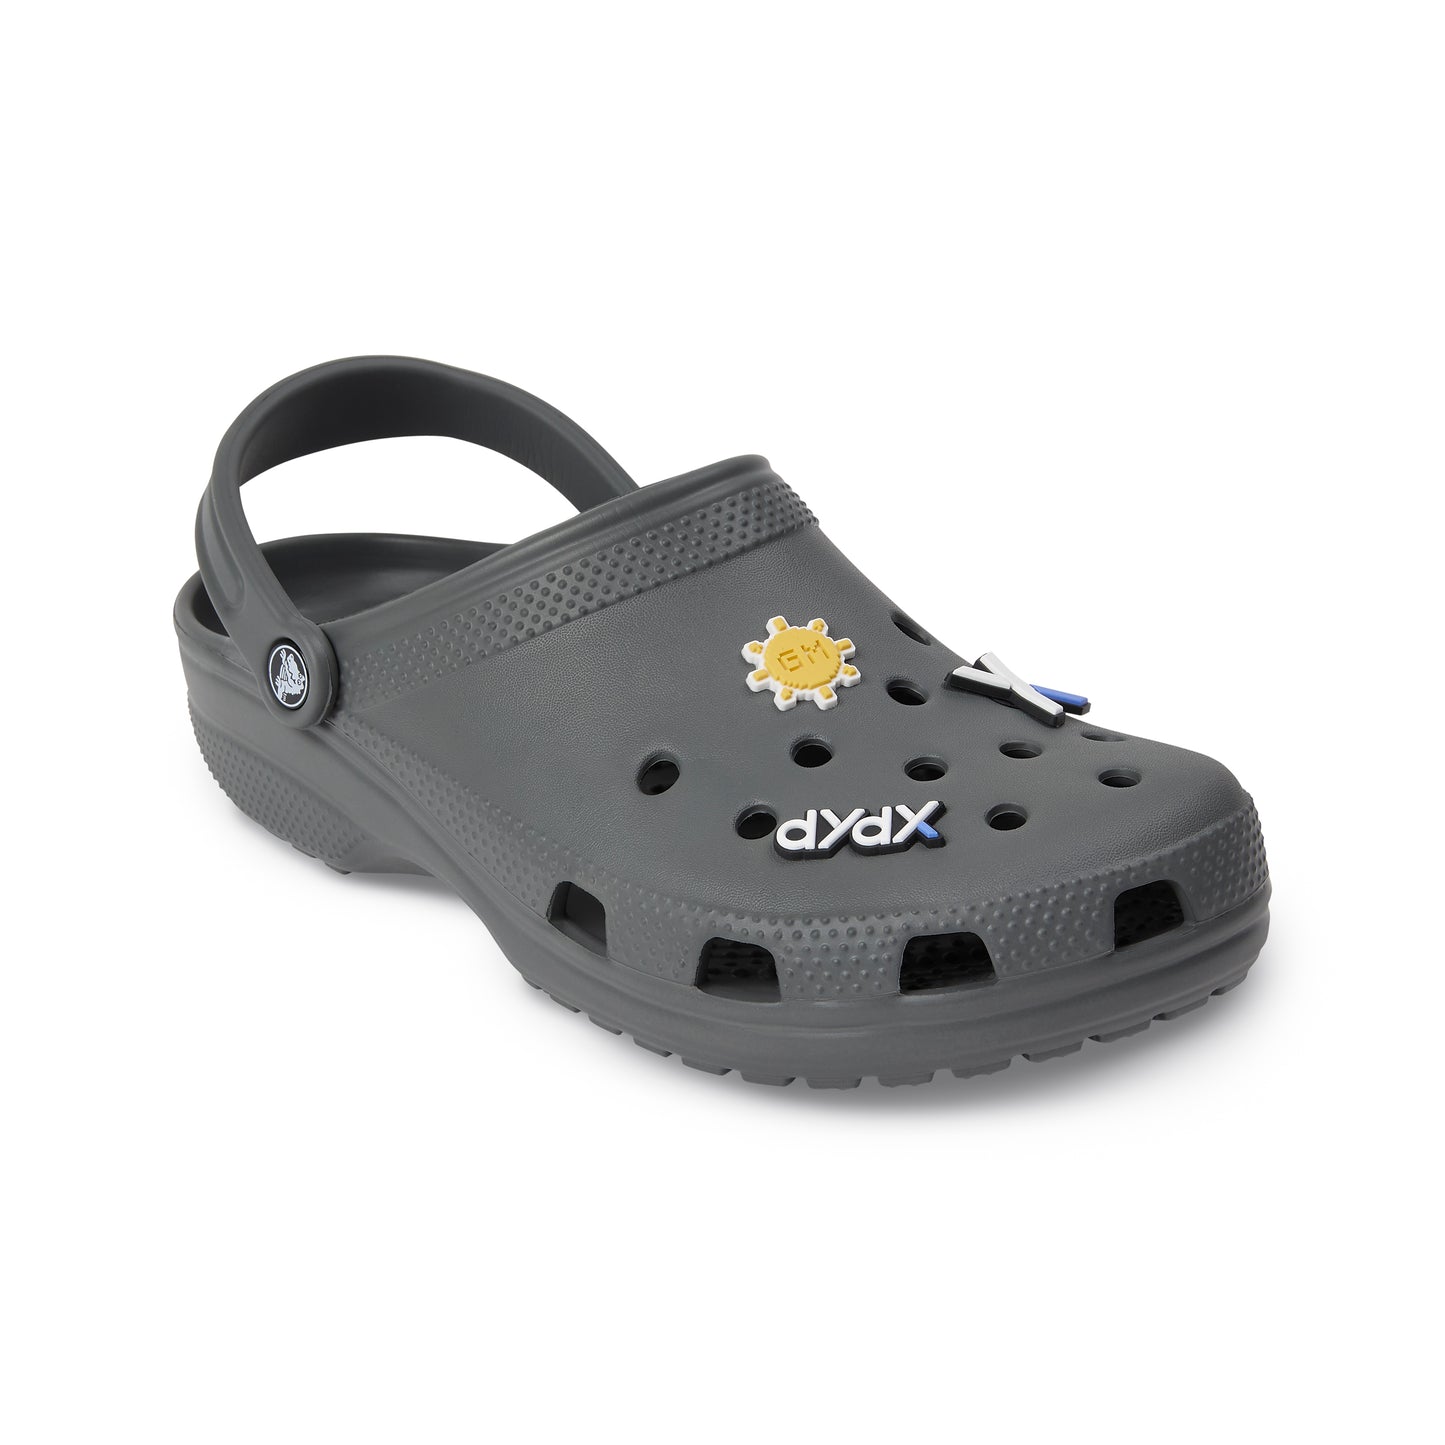 Crocs classic clogs in black with Jibbitz